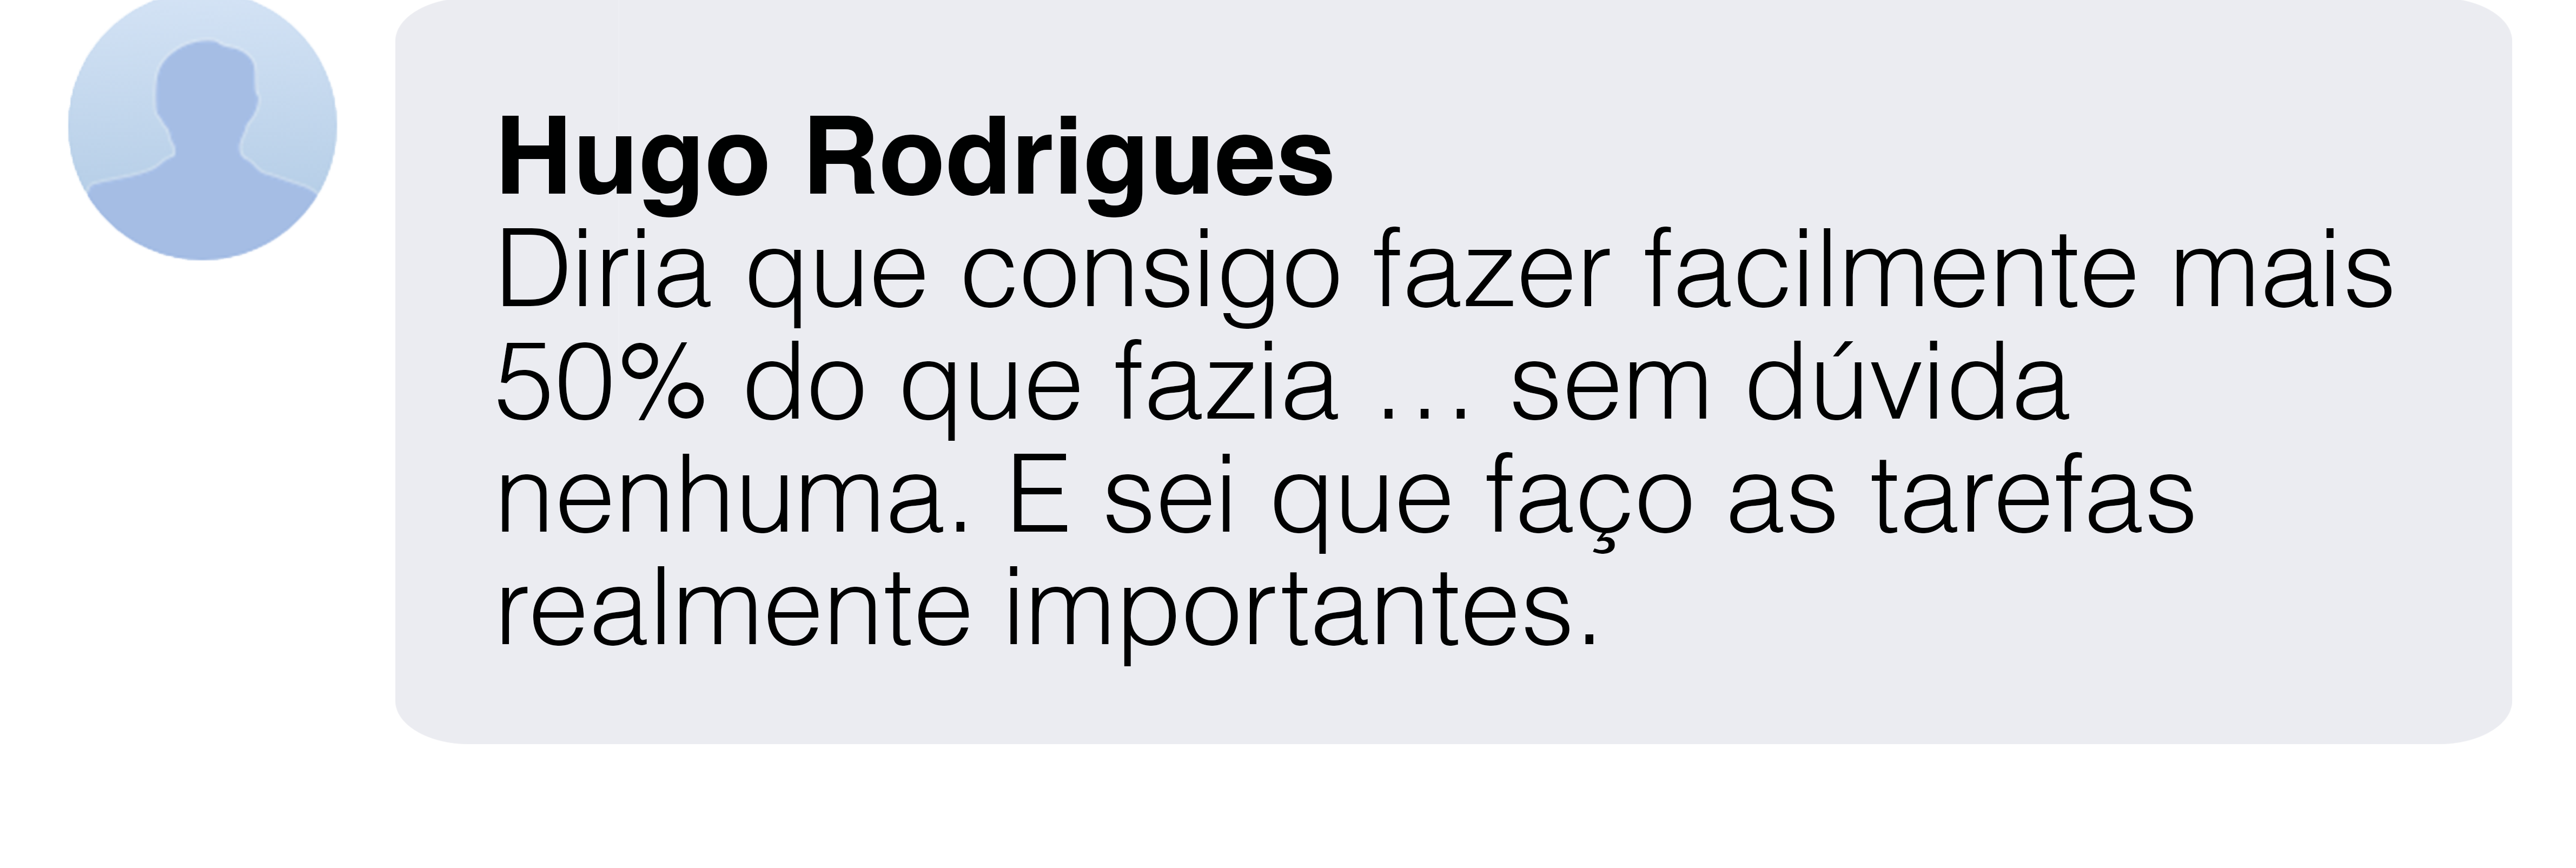 Hugo Rodrigues1